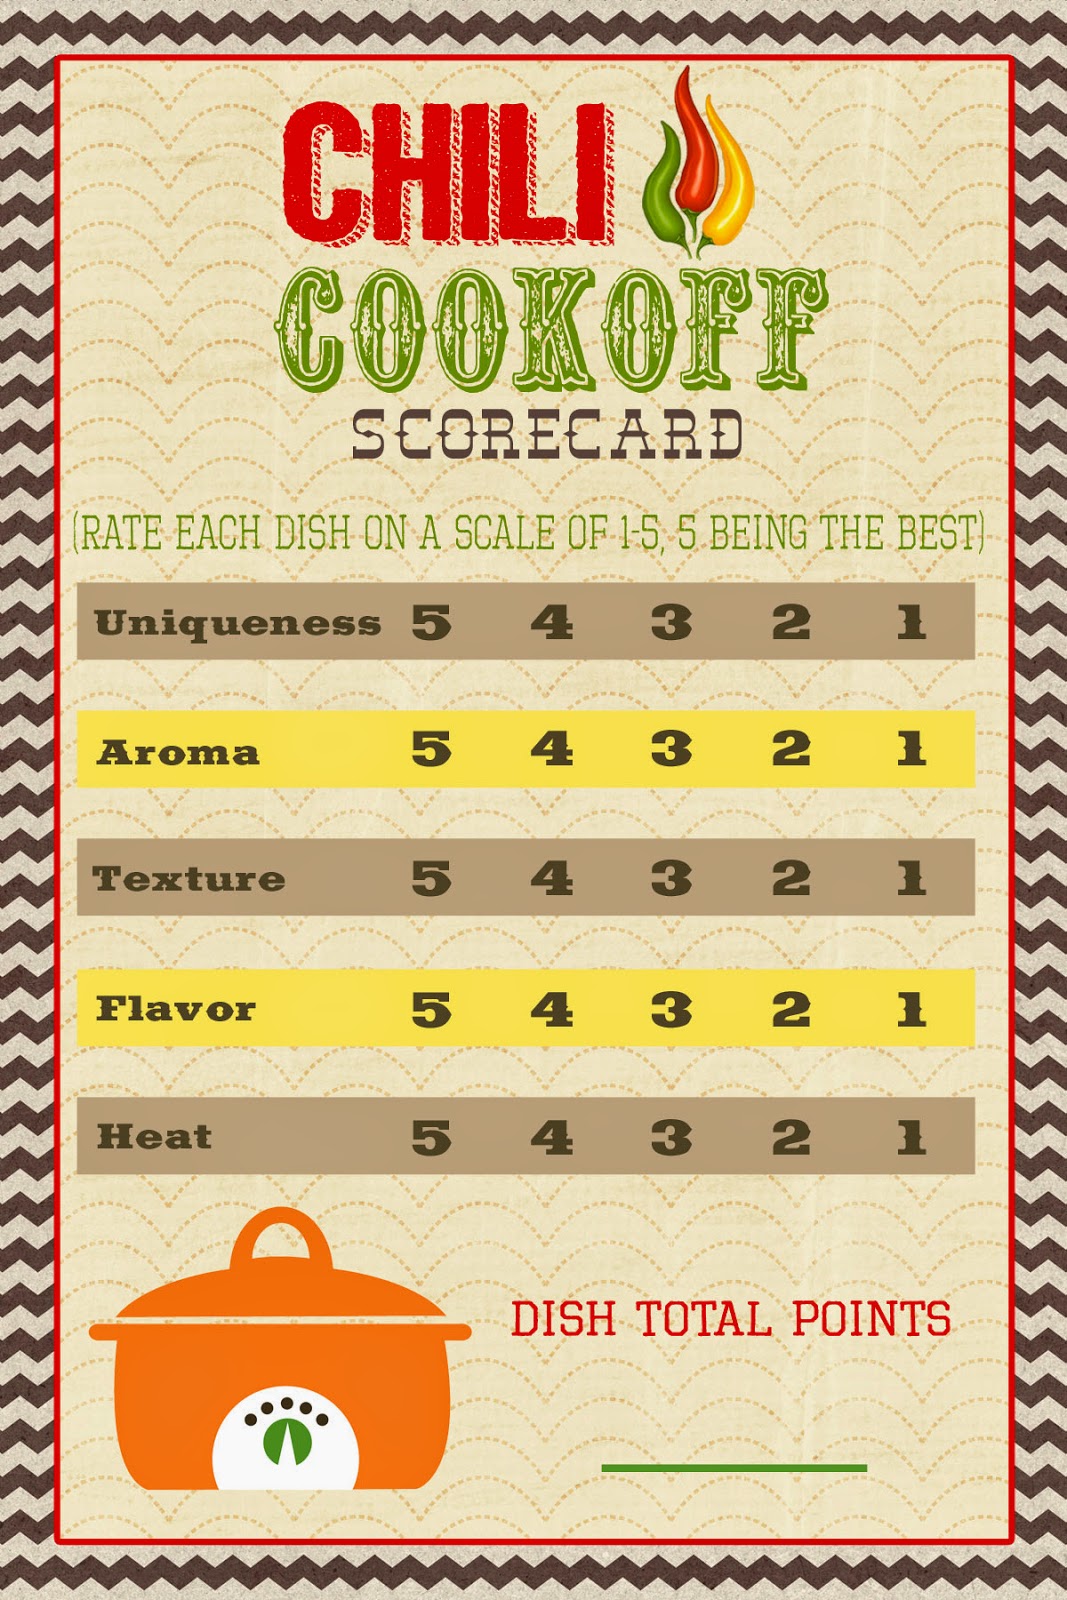 a-pocket-full-of-lds-prints-chili-cook-off-scorecard